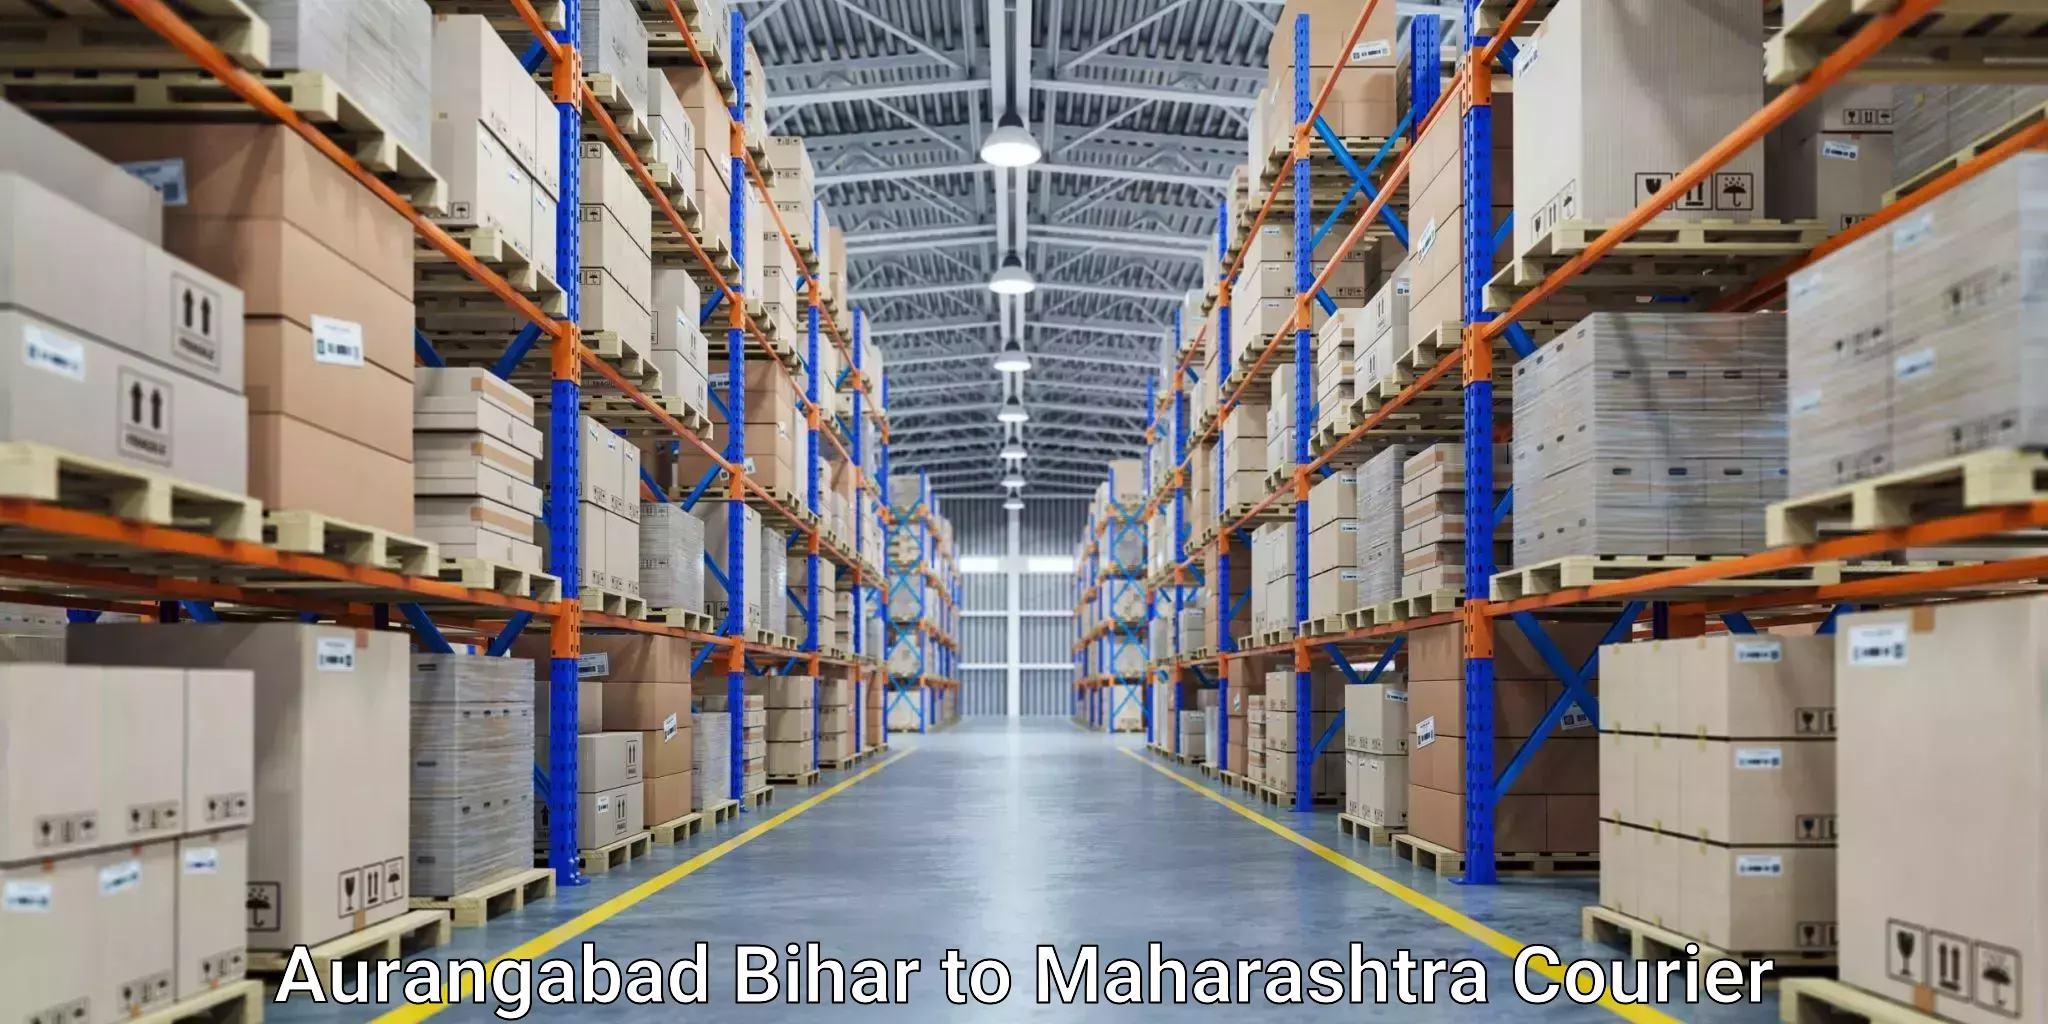 Reliable parcel services Aurangabad Bihar to Jawaharlal Nehru Port Nhava Sheva